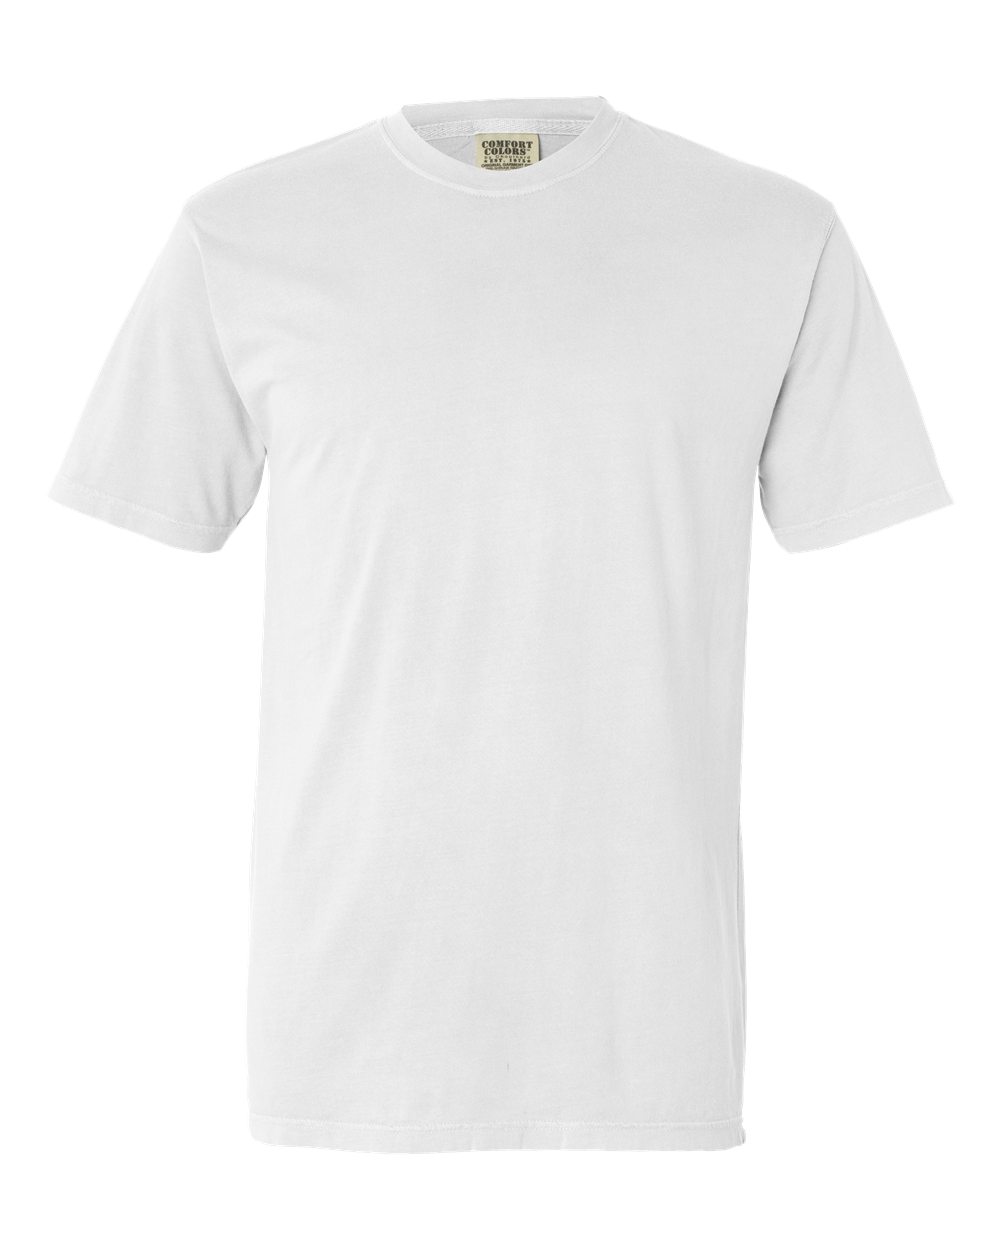 Comfort Colors 4017 - Combed Ringspun Cotton T-Shirt $8.40 - T-Shirts